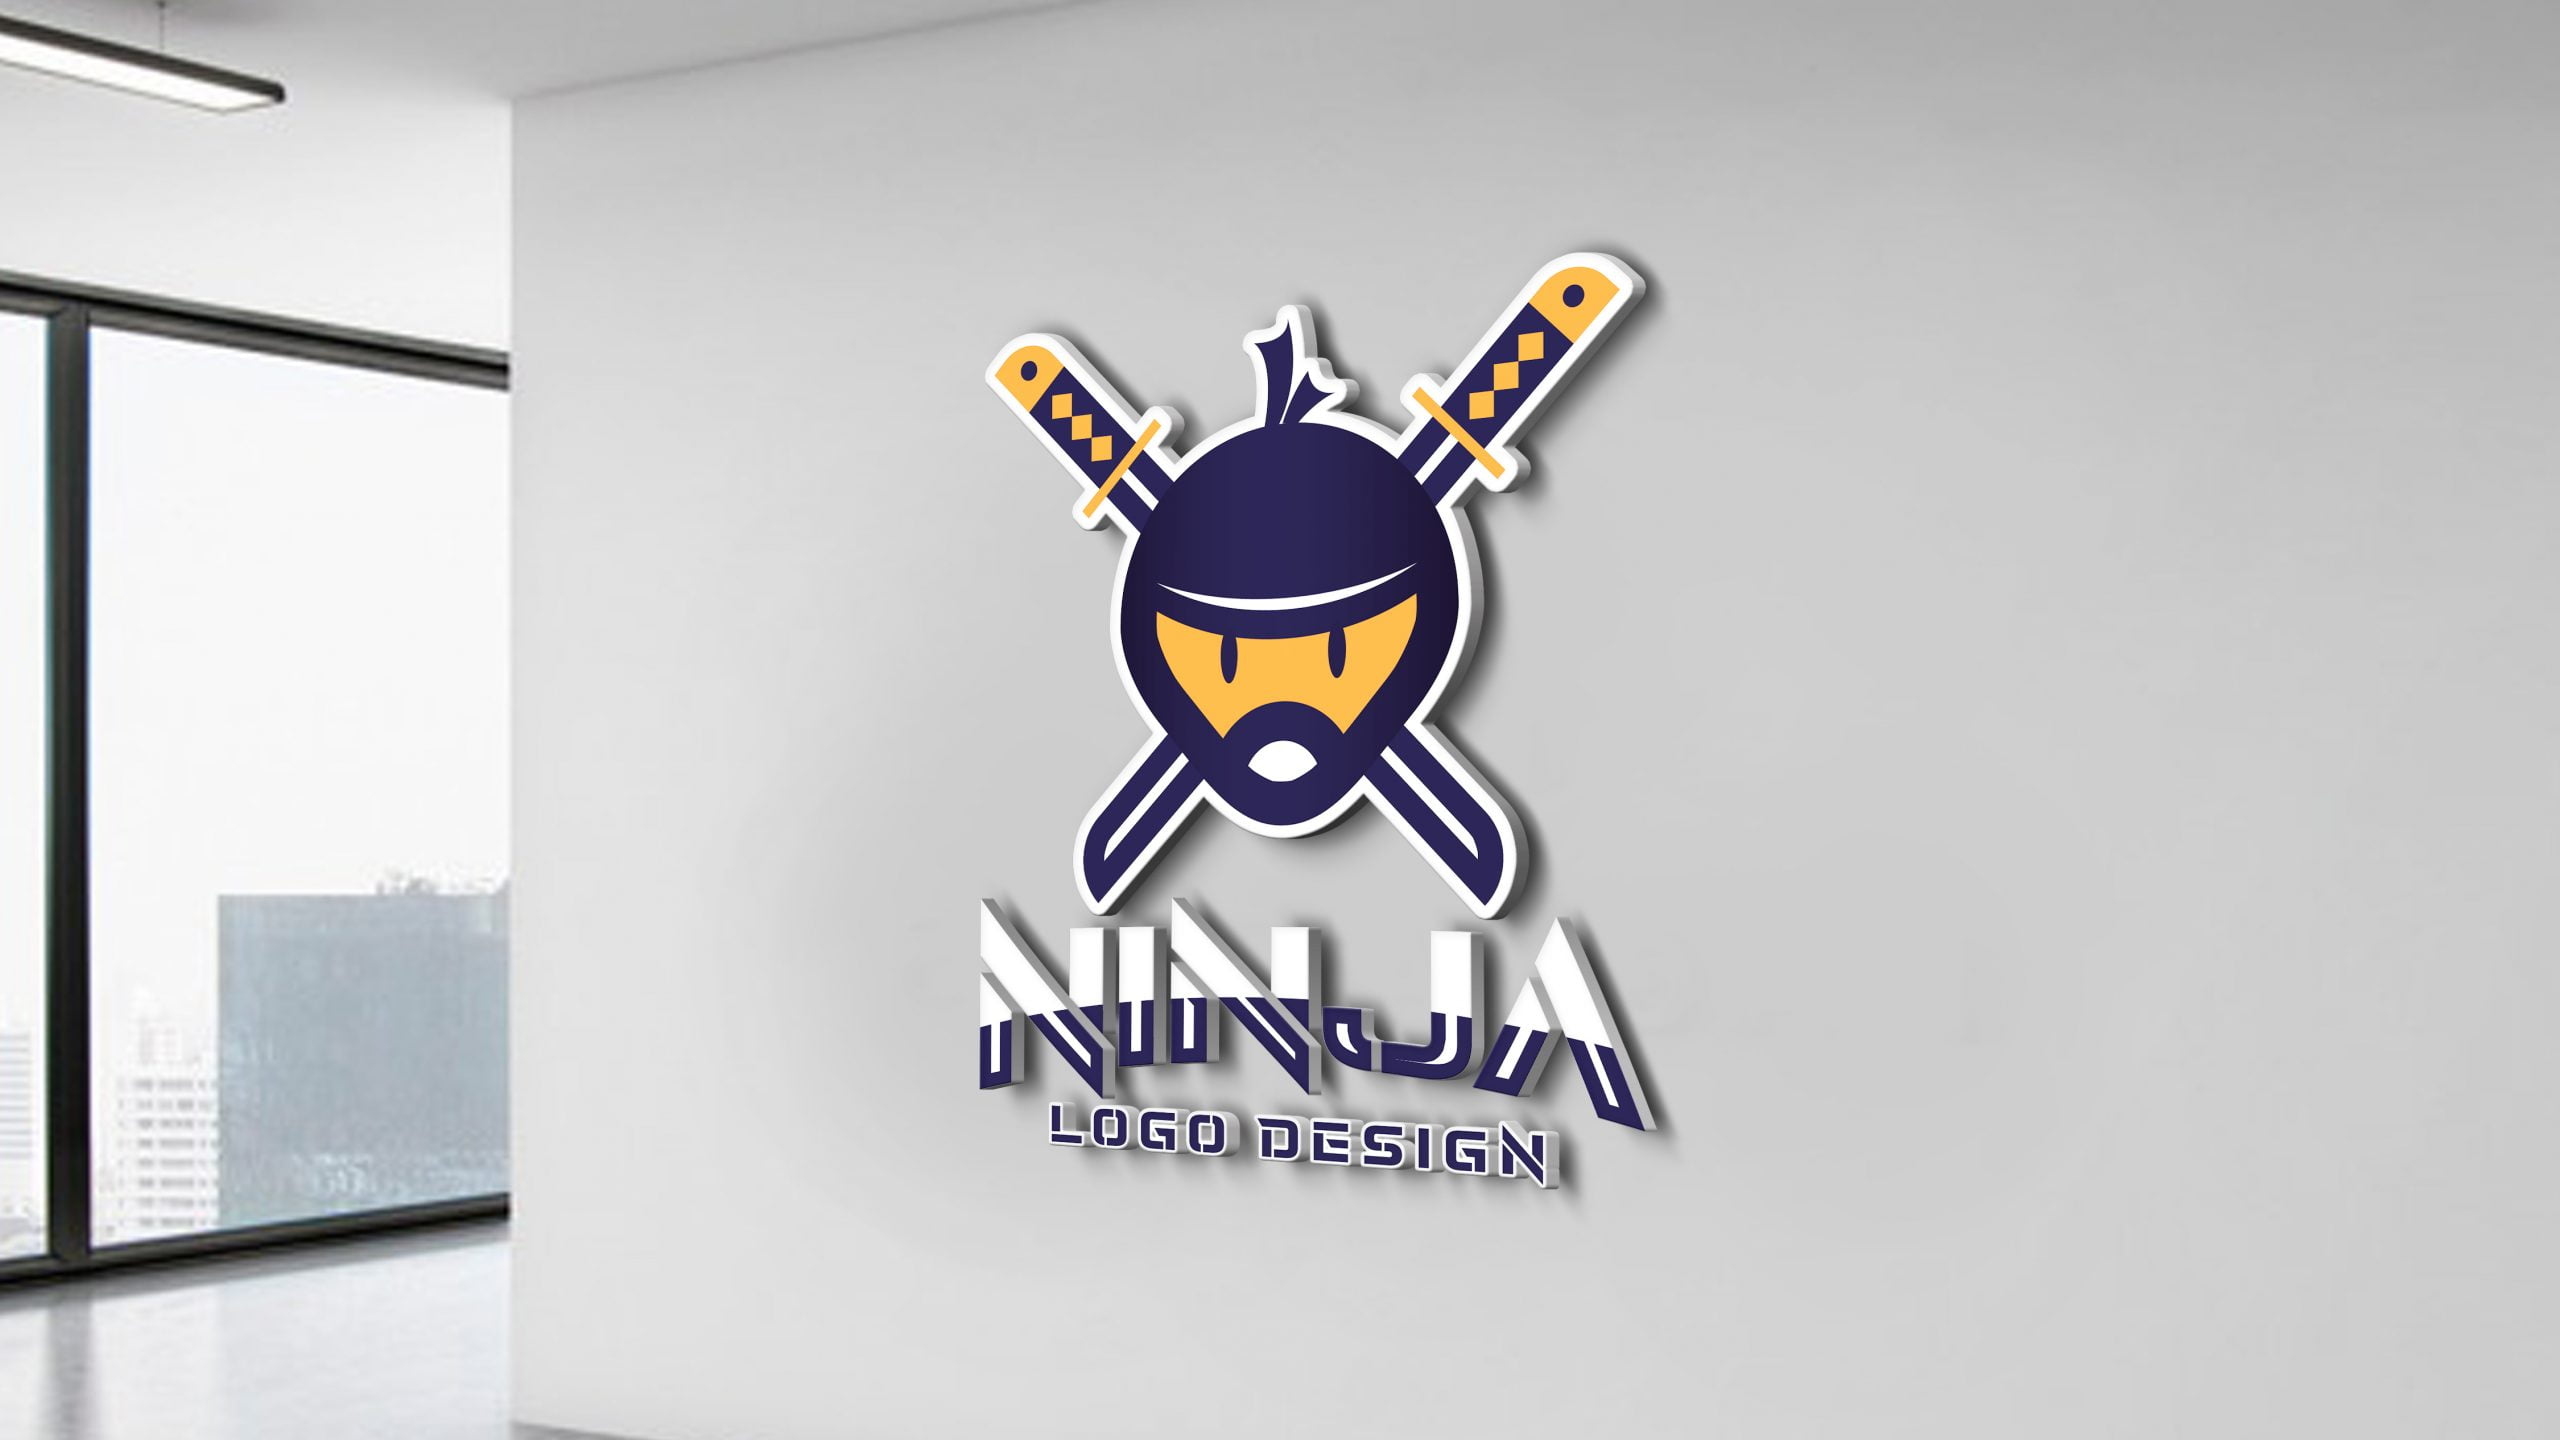 https://graphicsfamily.com/wp-content/uploads/edd/2021/09/Ninja-Logo-Design-5-scaled.jpg